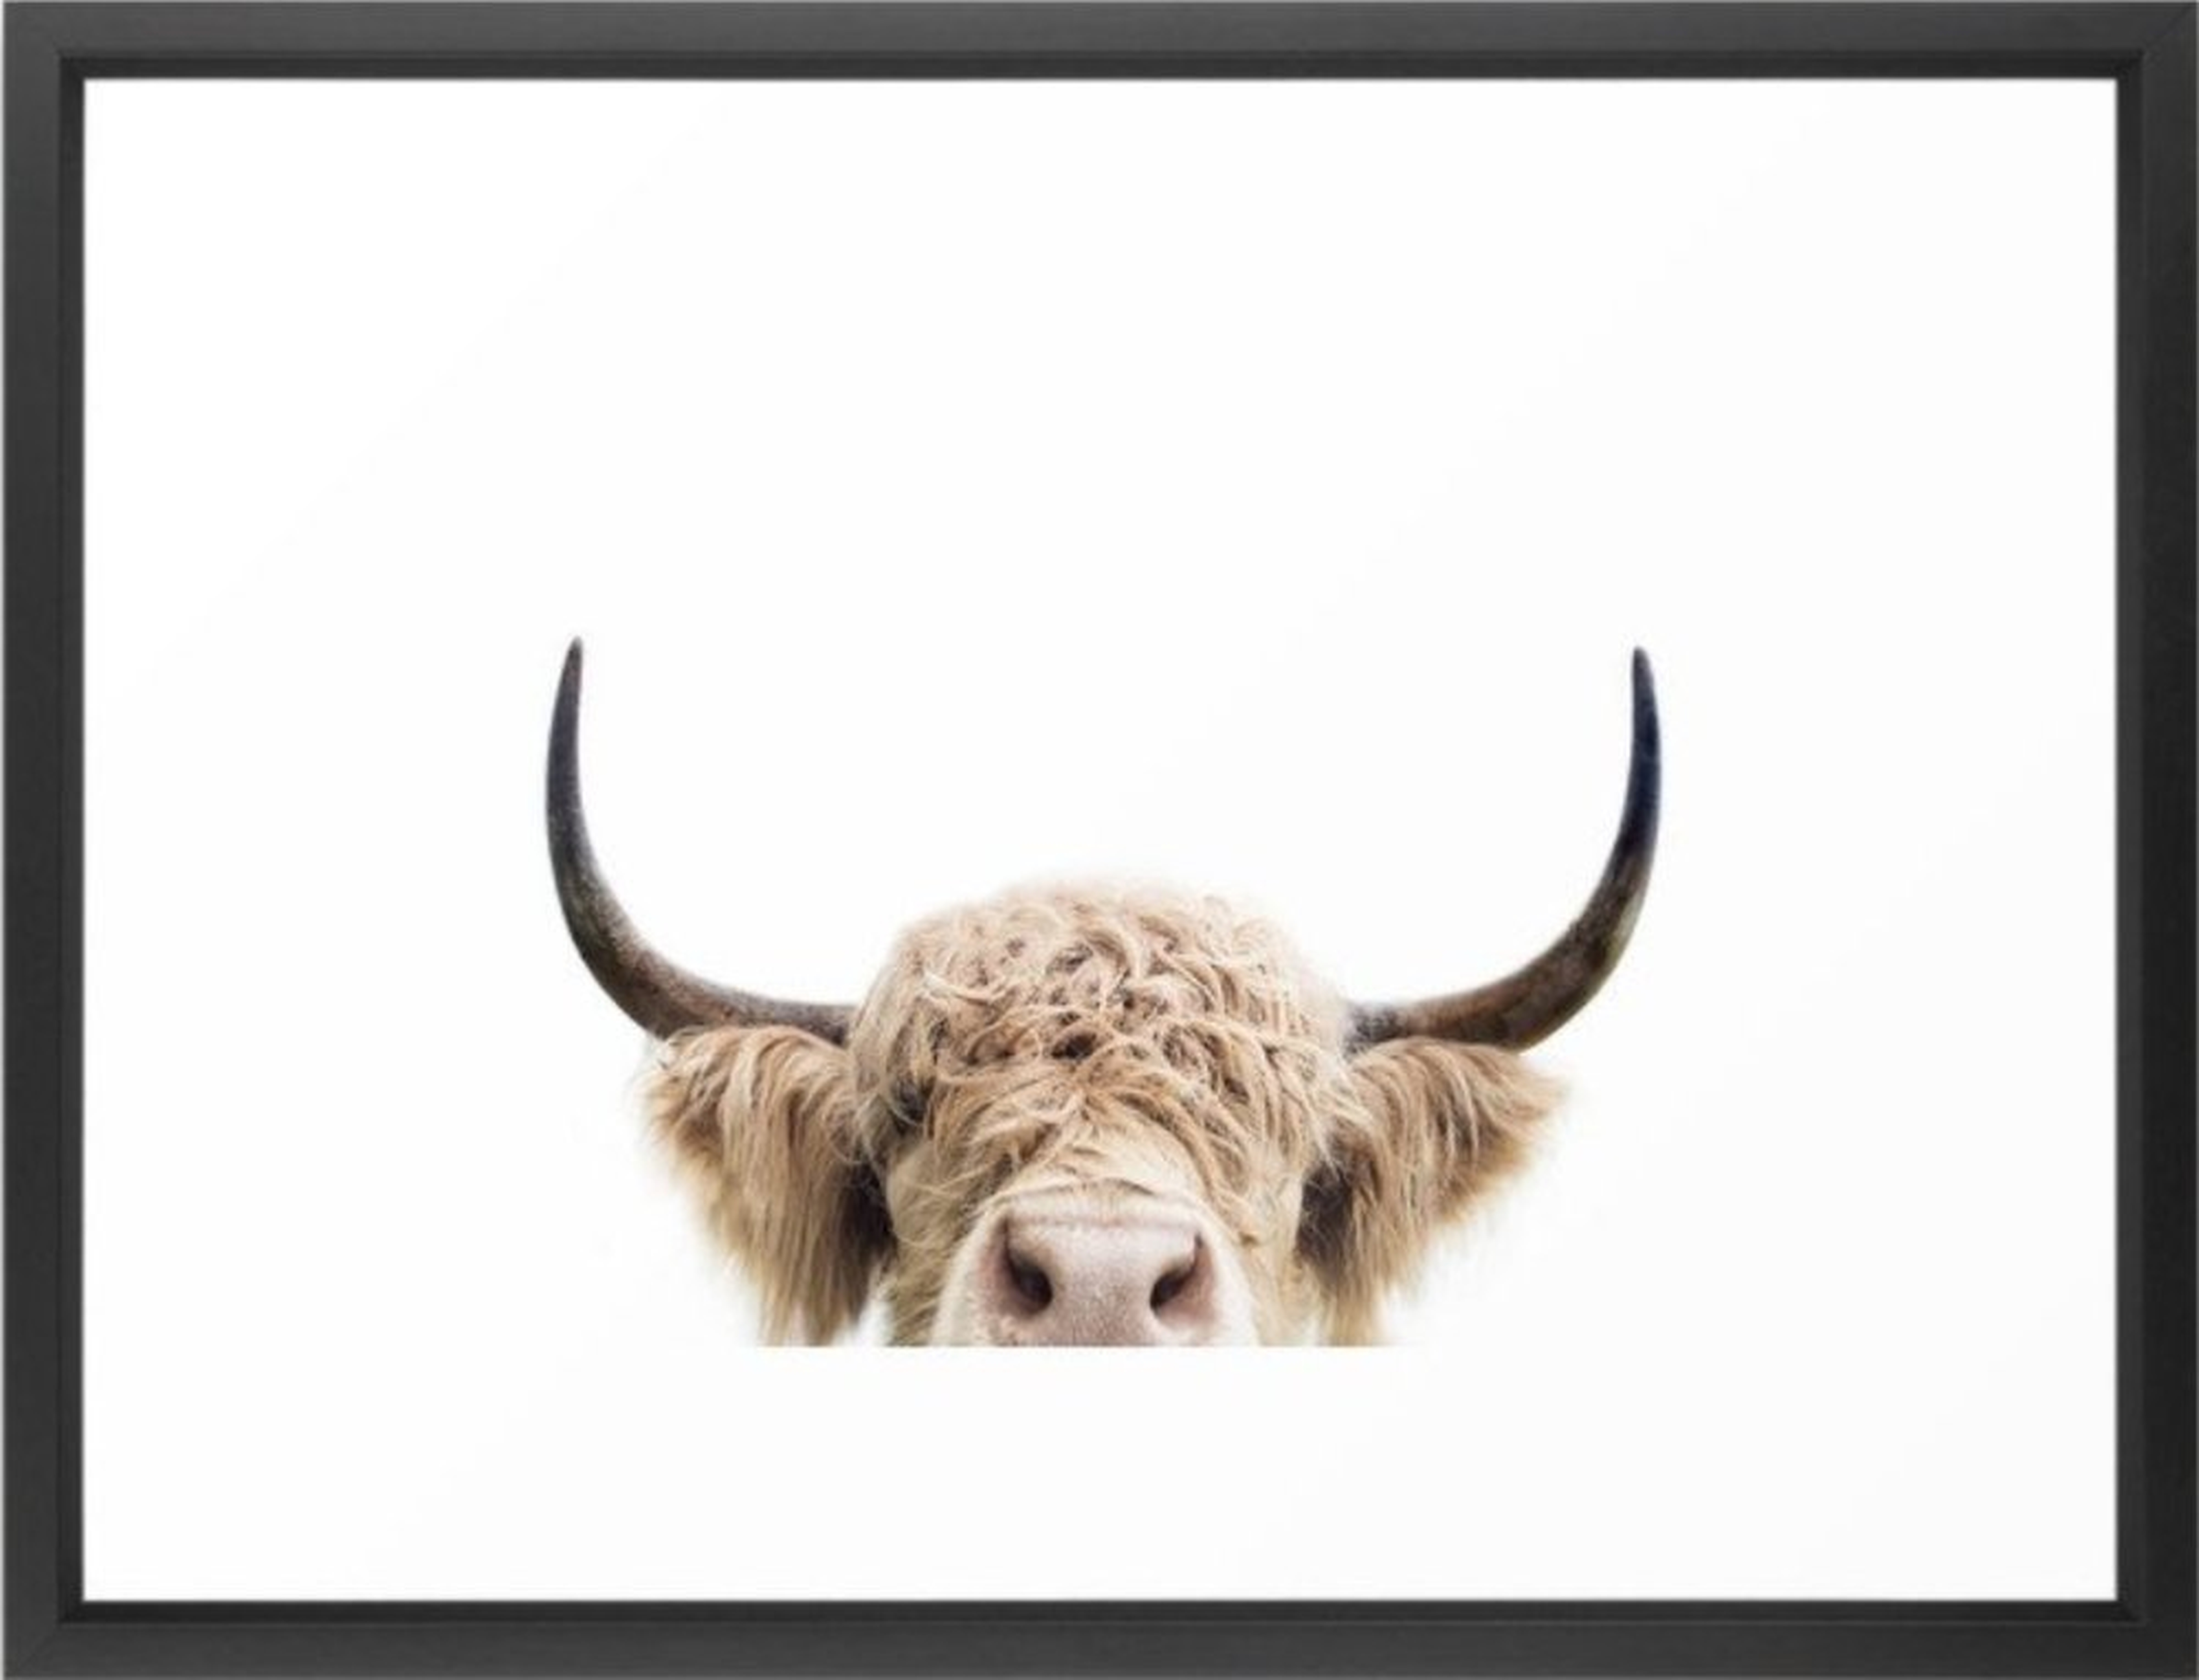 Peeking Highland Cow Framed Art Print by Sisi And Seb, 20" x 26"", Walnut frame - Society6